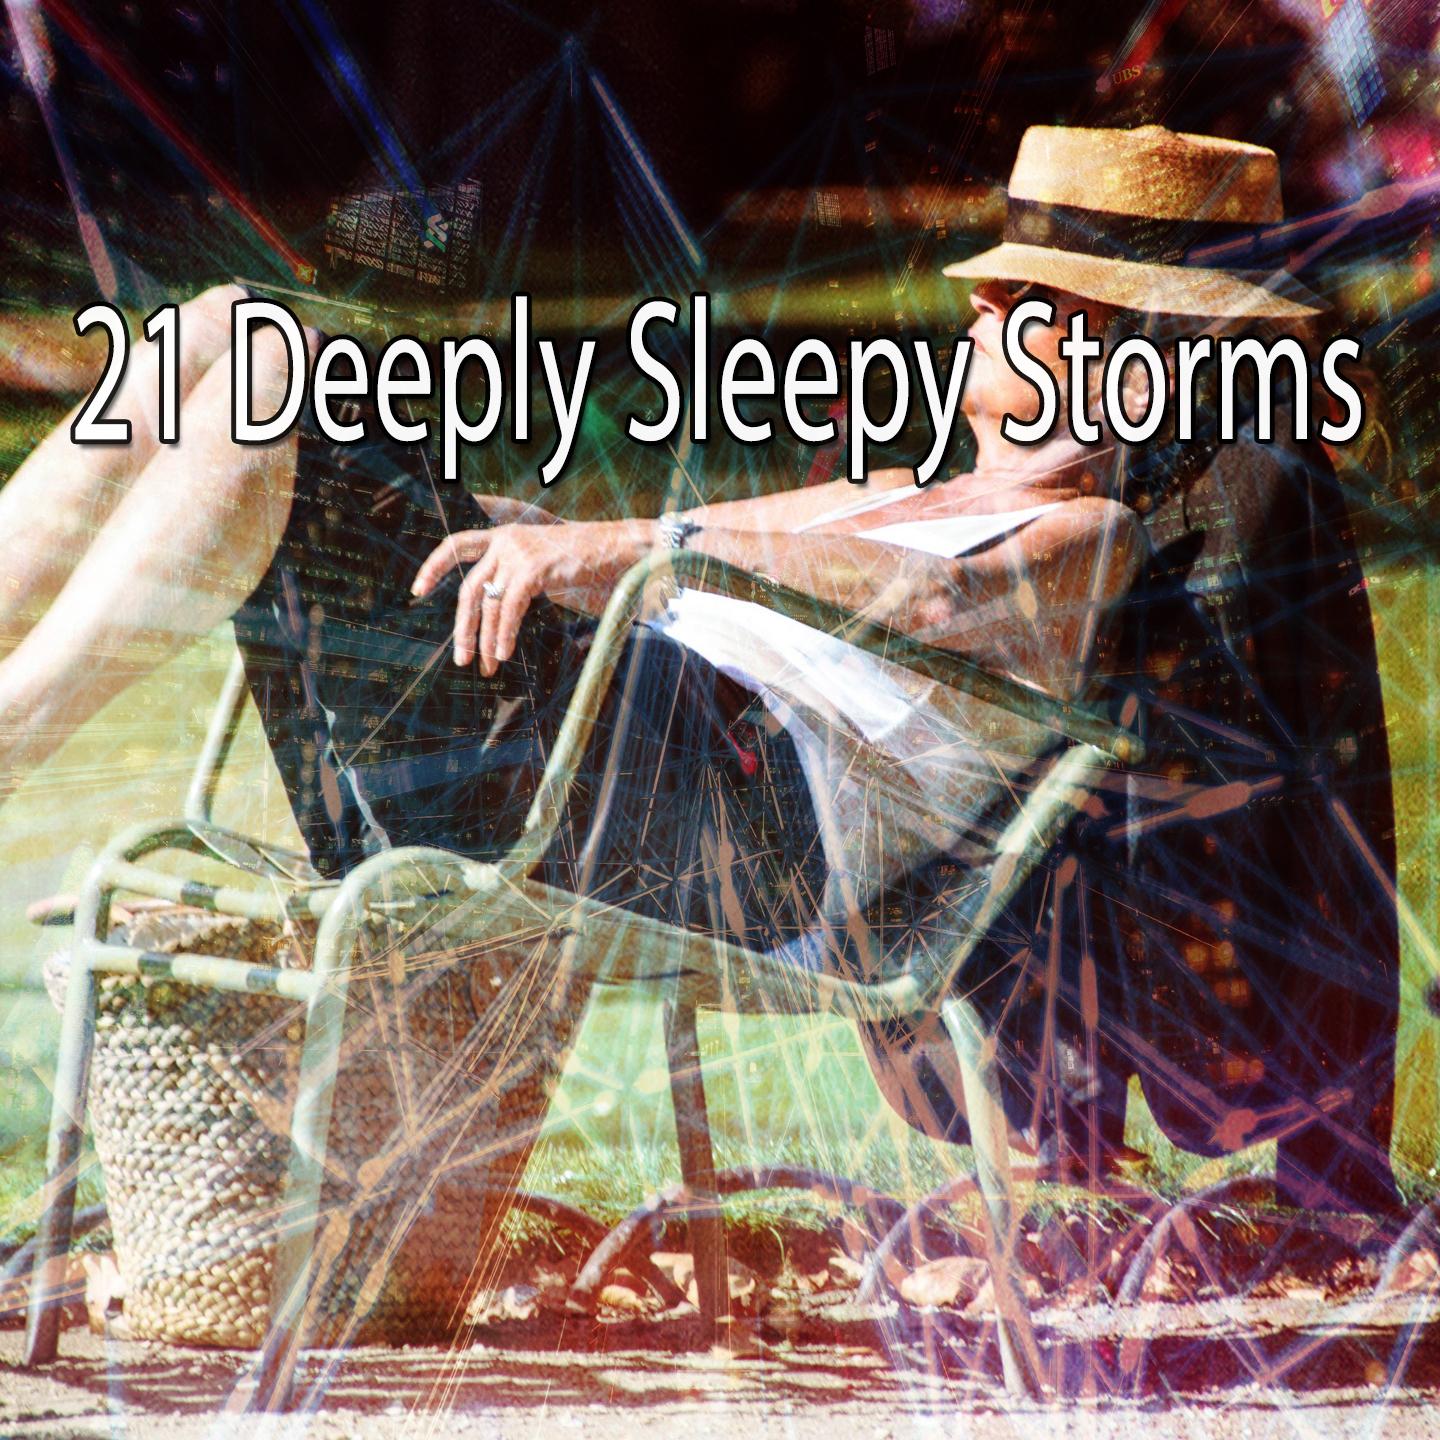 21 Deeply Sleepy Storms